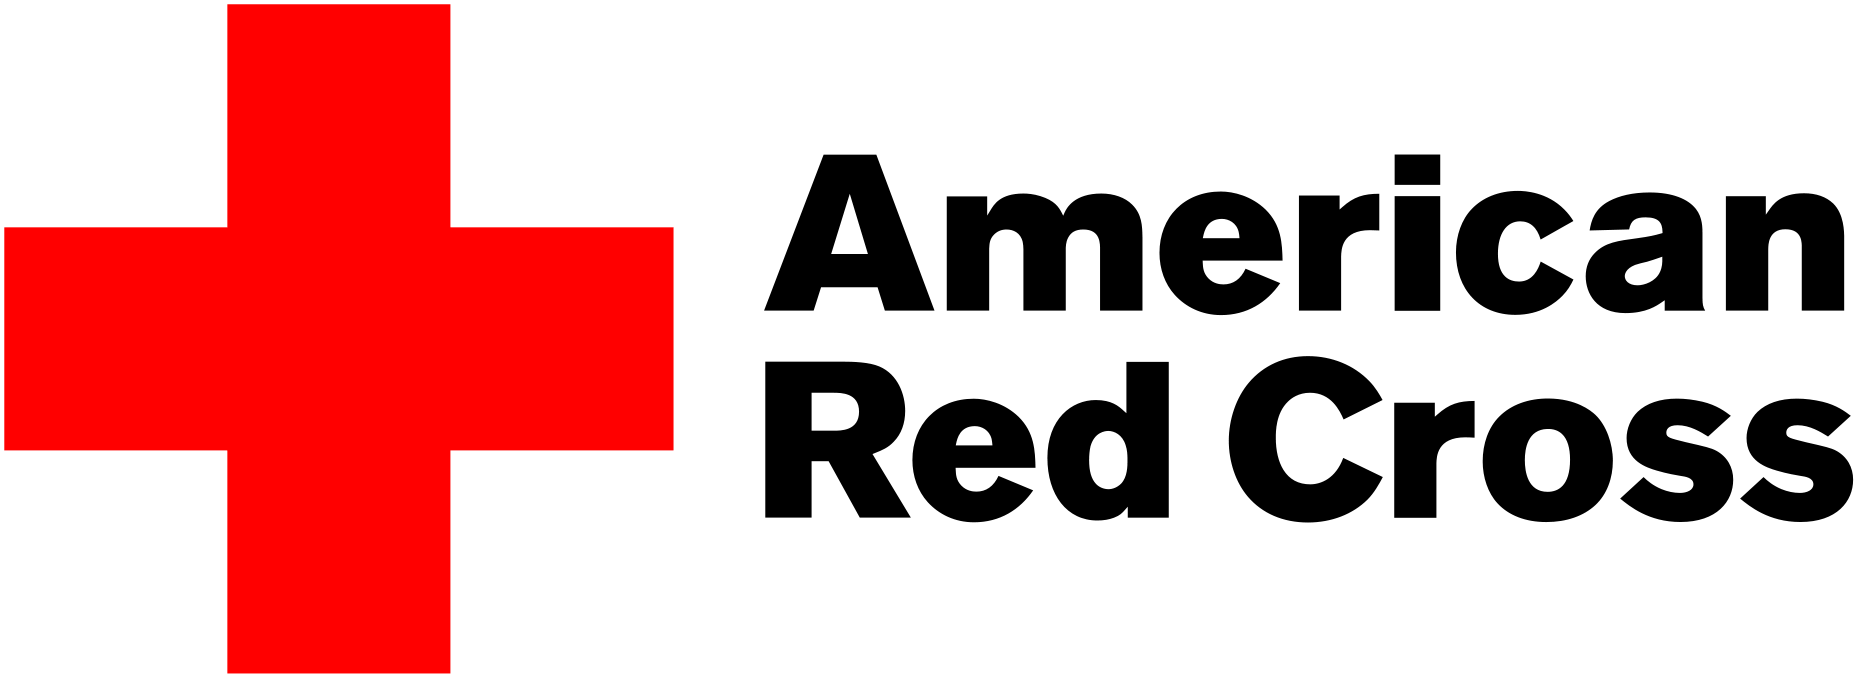 Red Medical Cross Logo - American Red Cross Logo, American Red Cross Symbol, Meaning, History ...